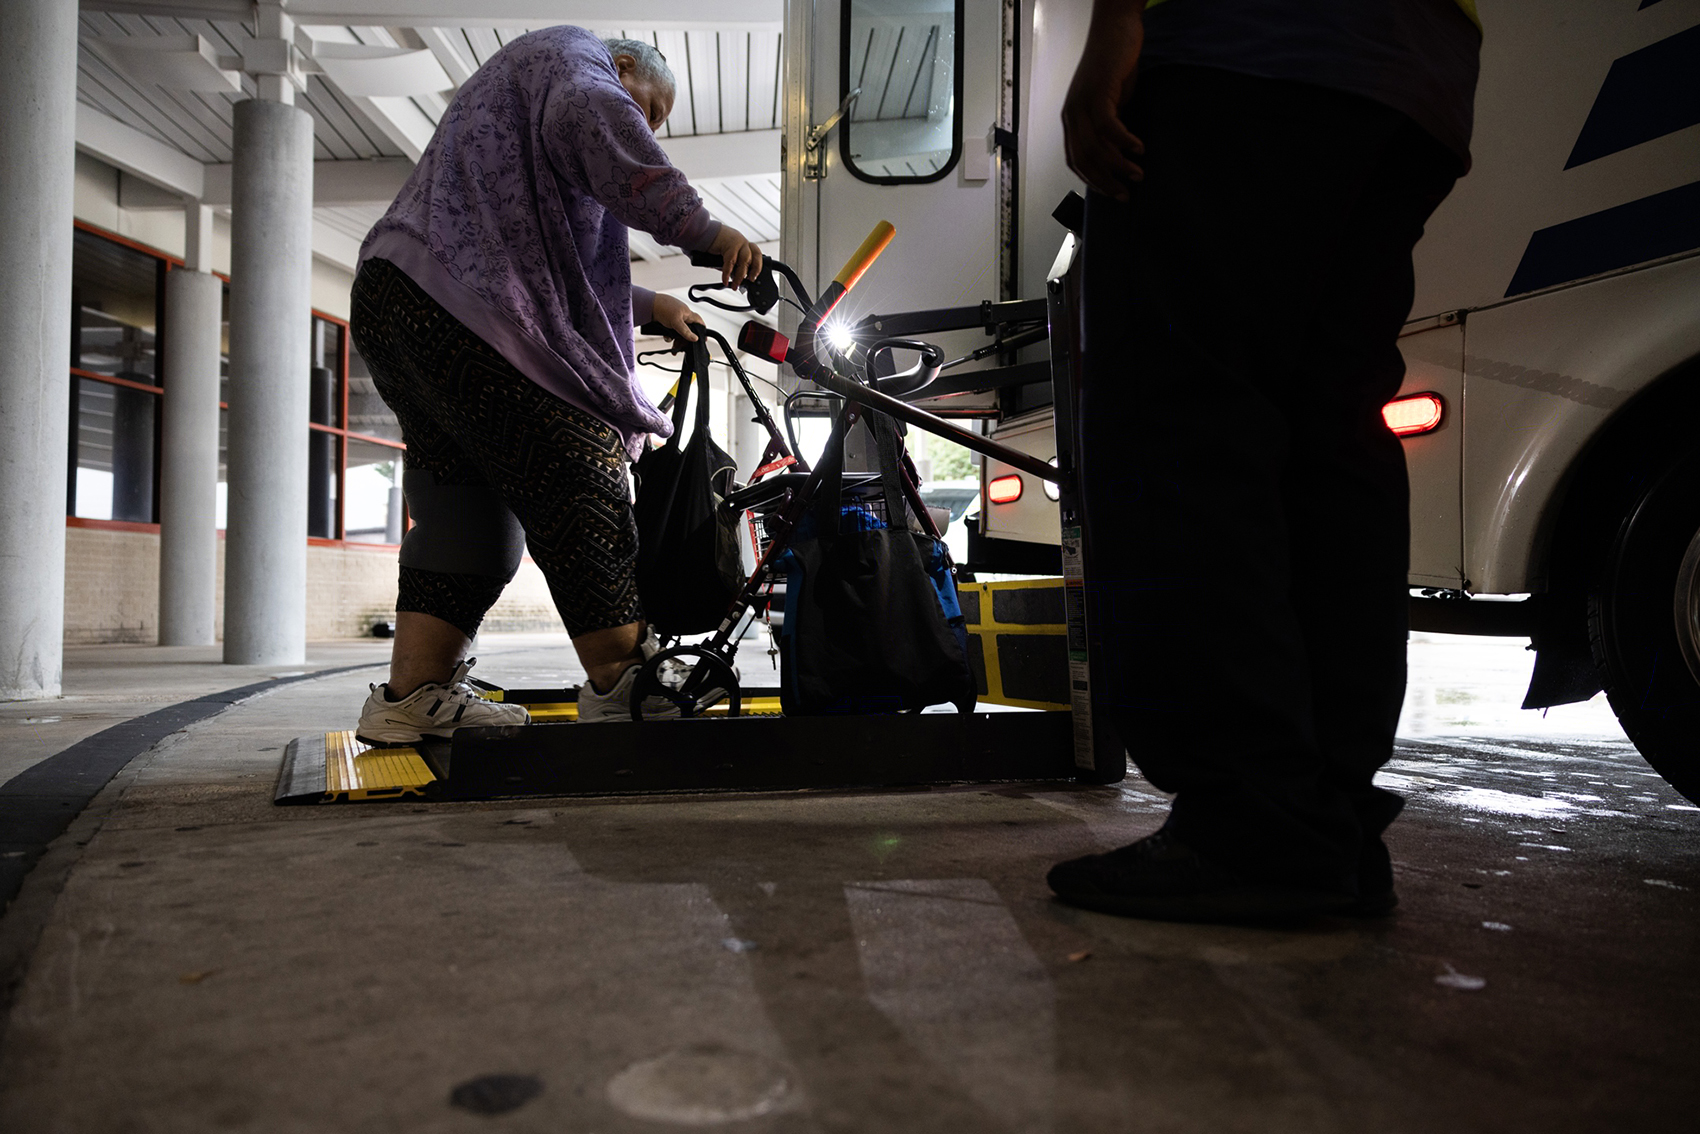 Shari Quattlebaum gets onto a METROLift vehicle using a lift outside of Metropolitan Multi-Service Center